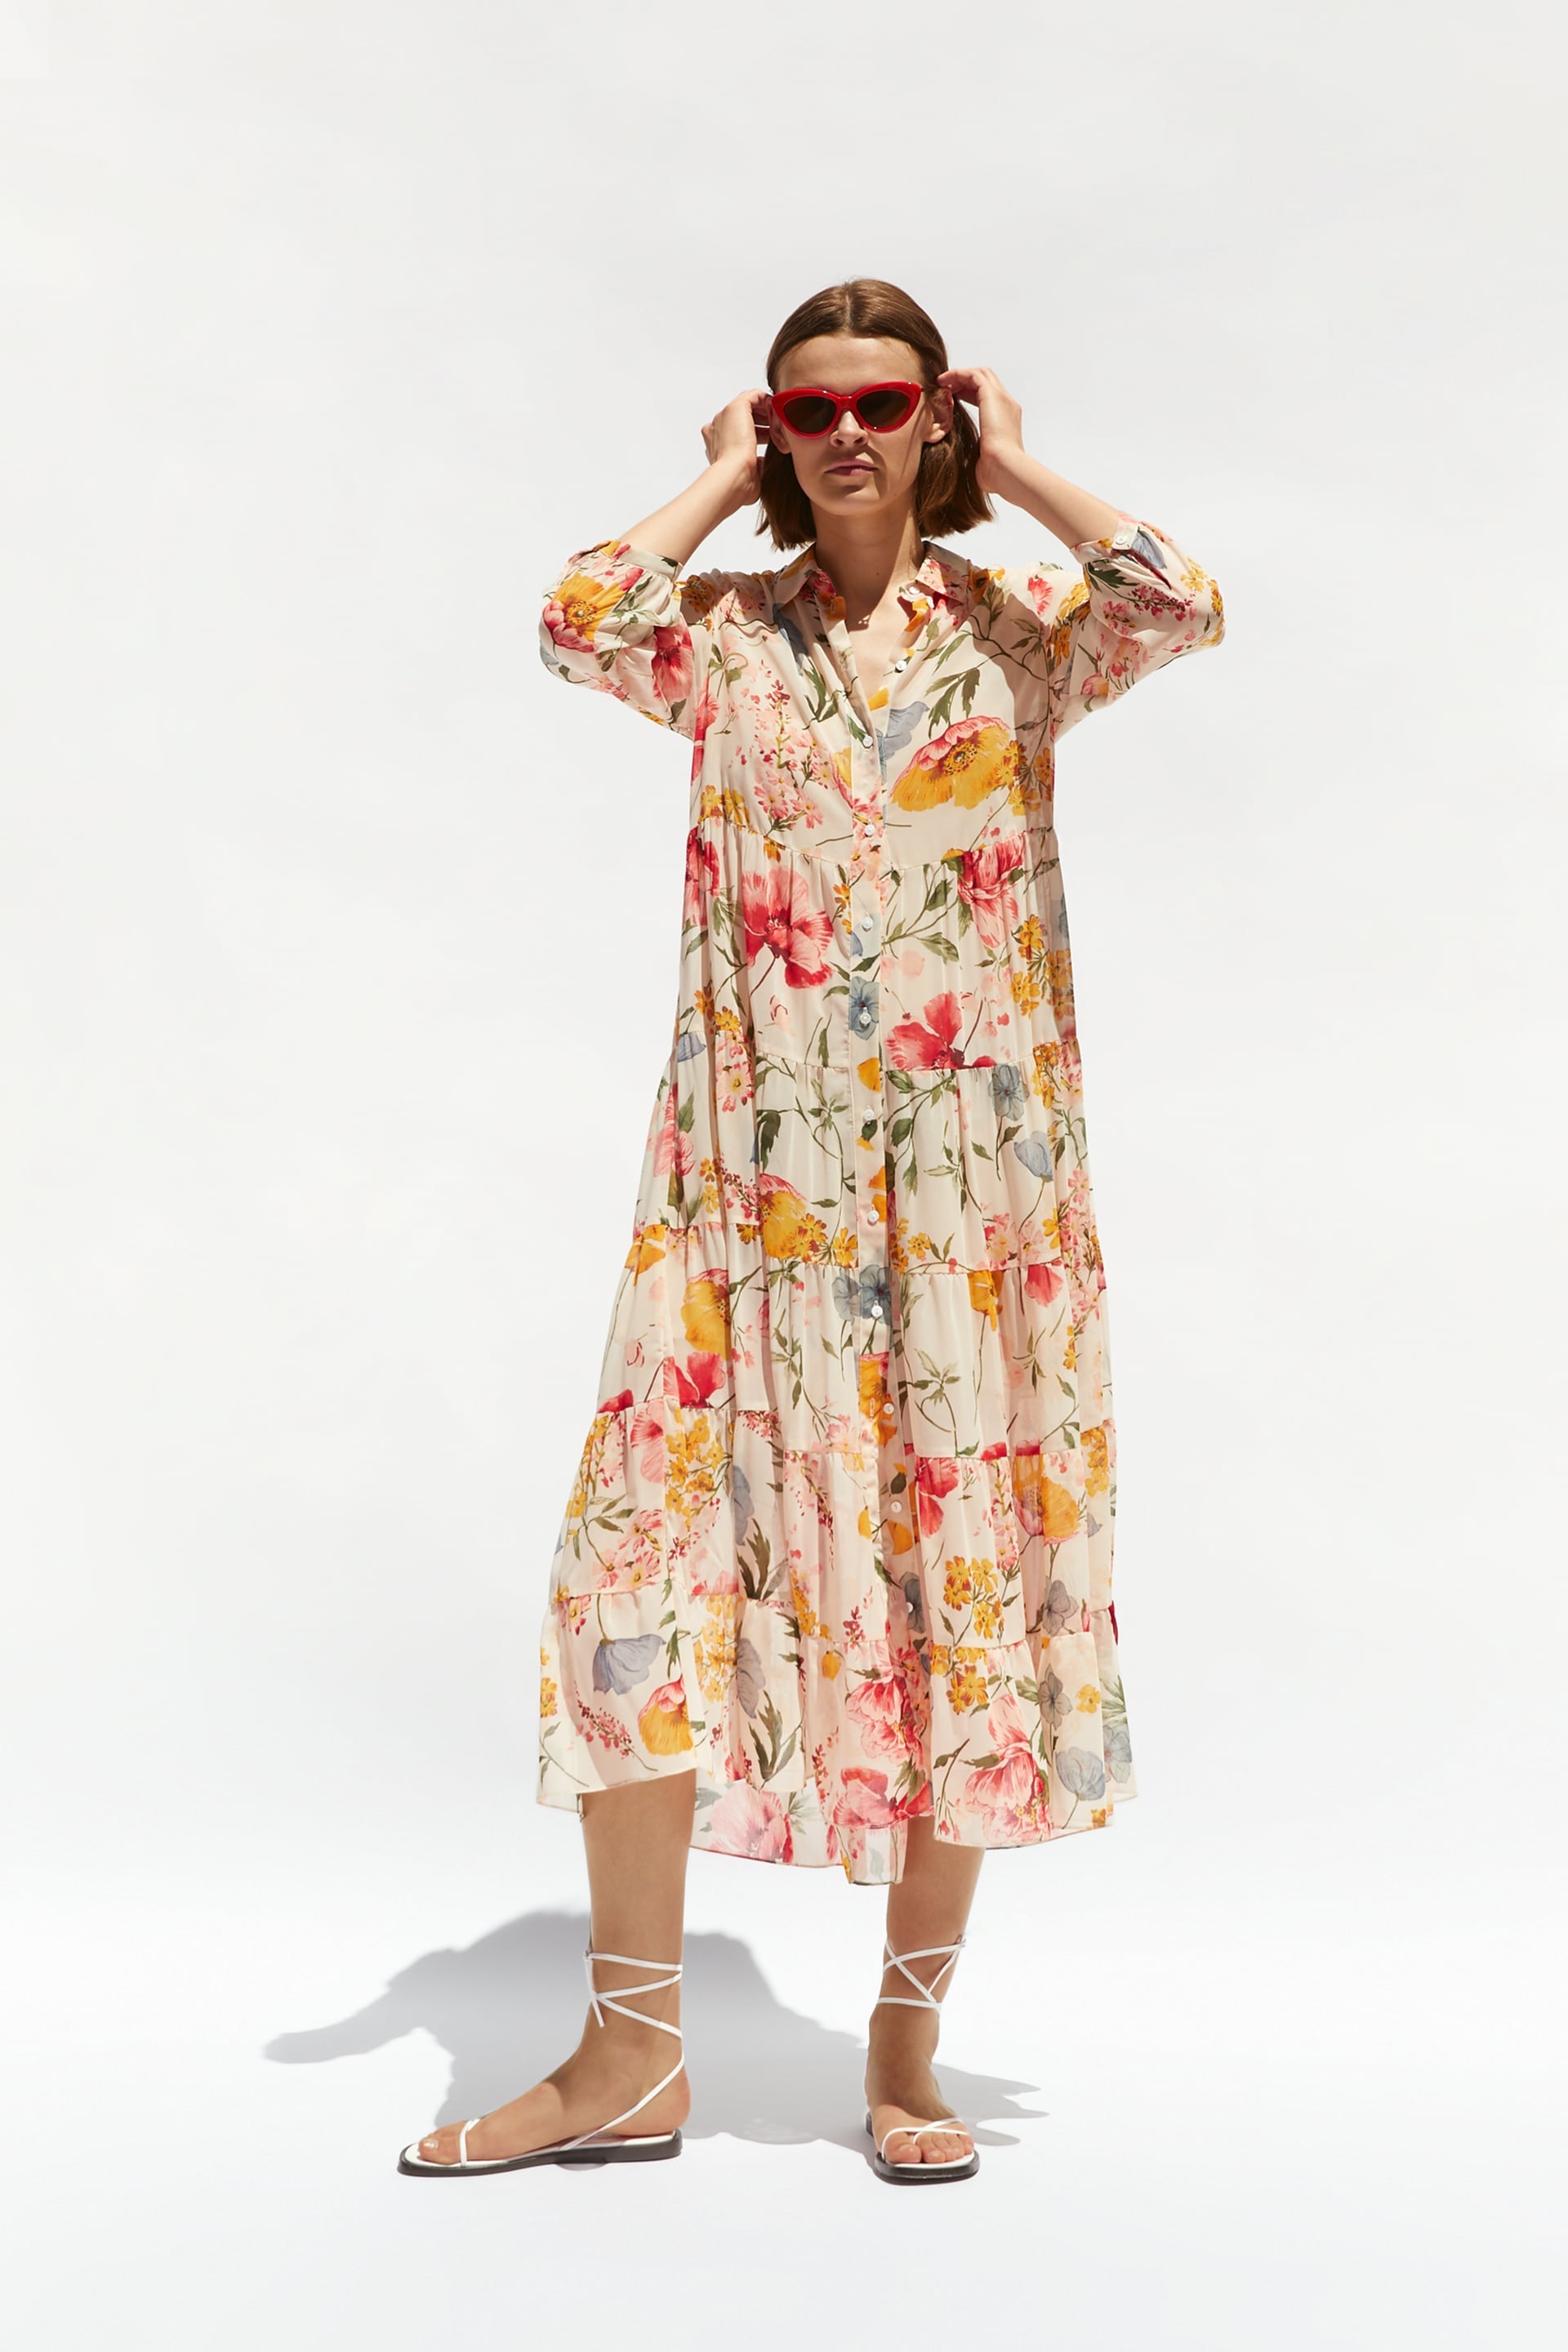 Zara Floral Print Dress | Zara Sale 